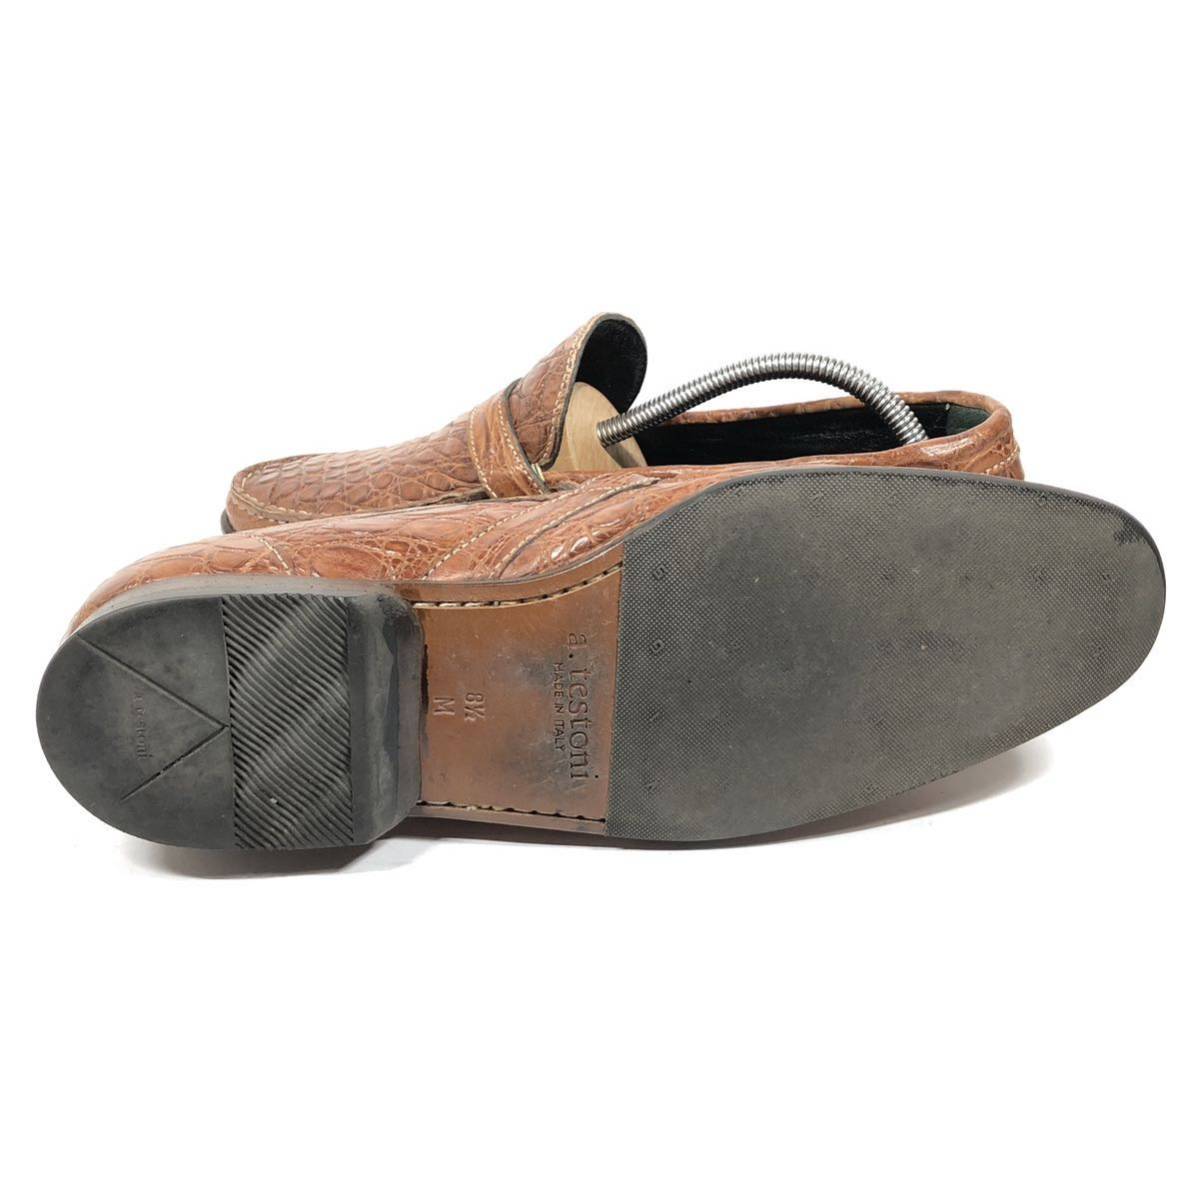 [a* тест -ni] подлинный товар a.testoni обувь 27.5cm чай общий крокодил Loafer туфли без застежки бизнес обувь wani кожа мужской сделано в Италии 8 1/2 M